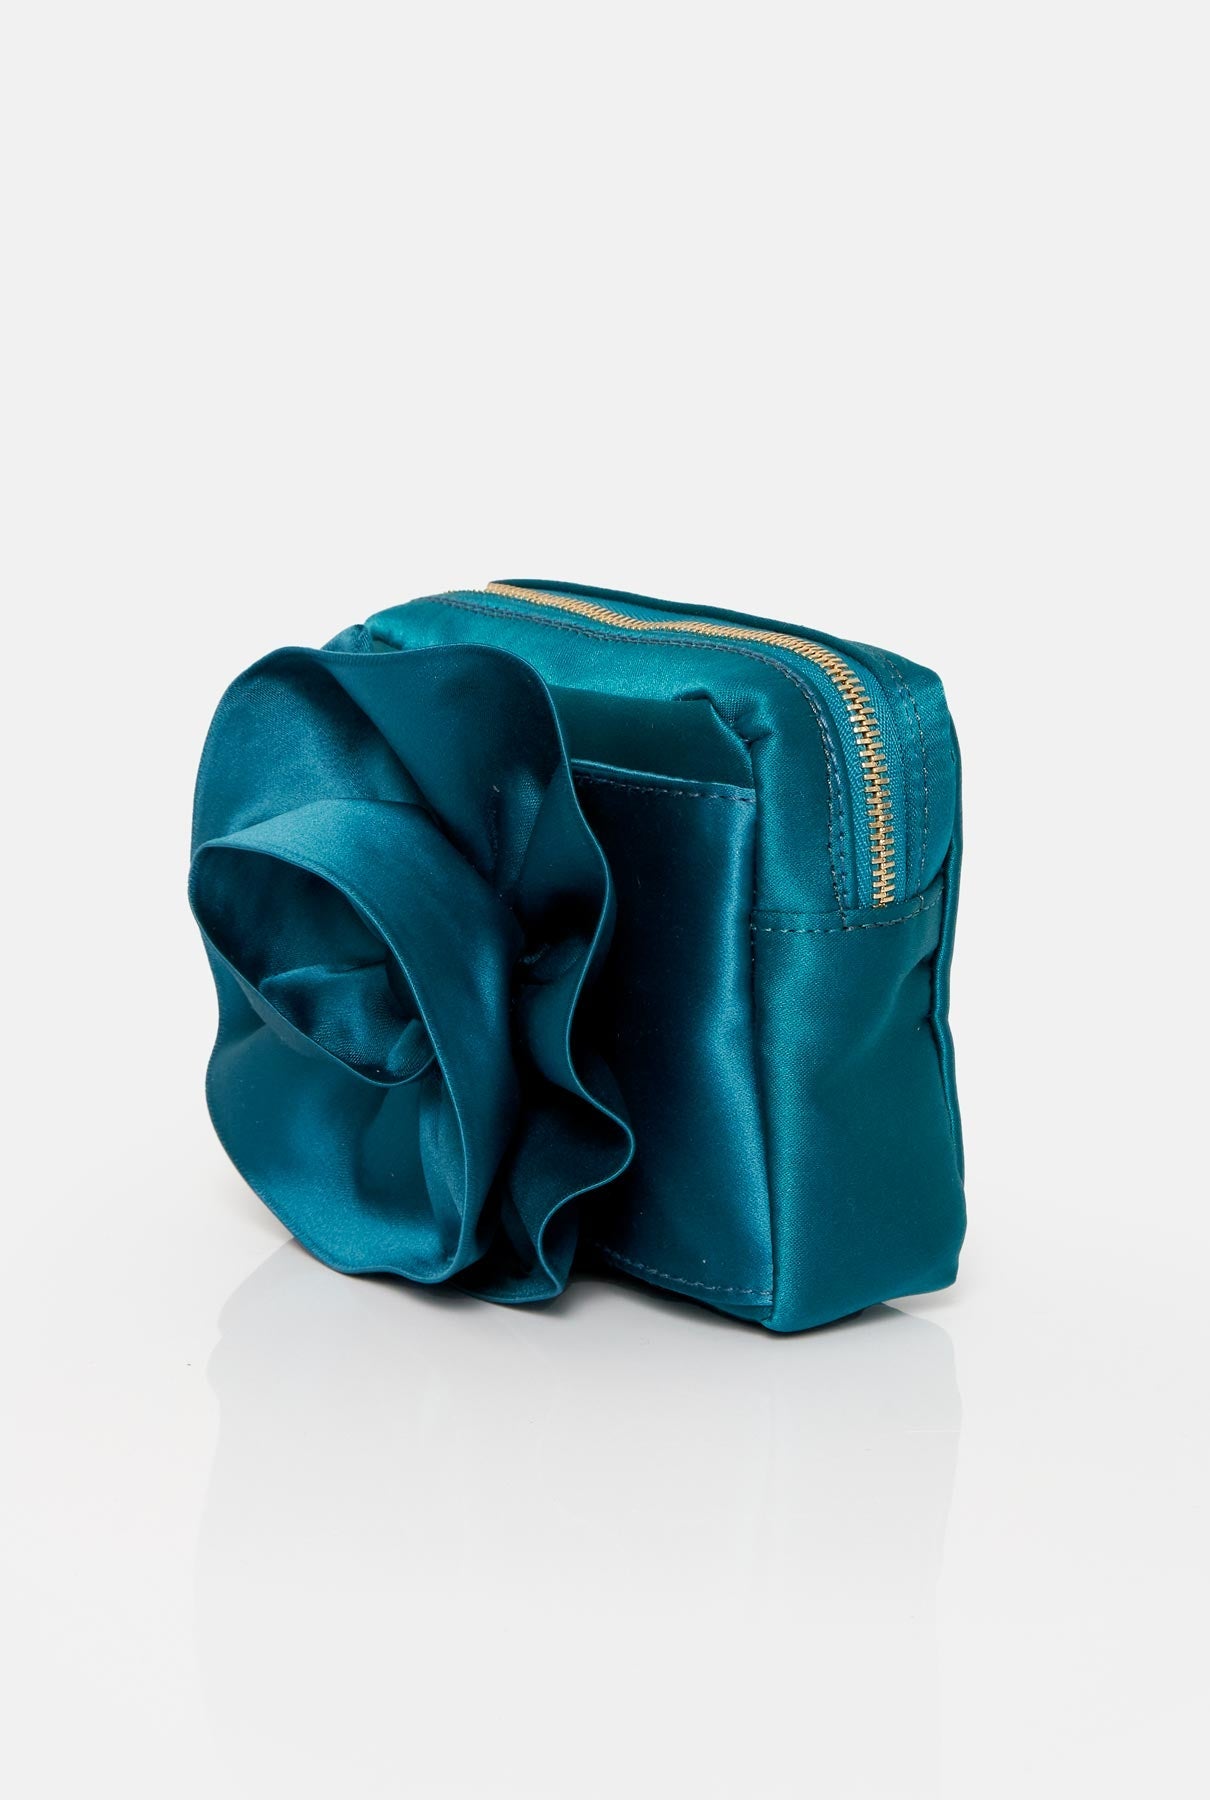 Pulseta bag Rose Blue Hand bags Celina Martin 